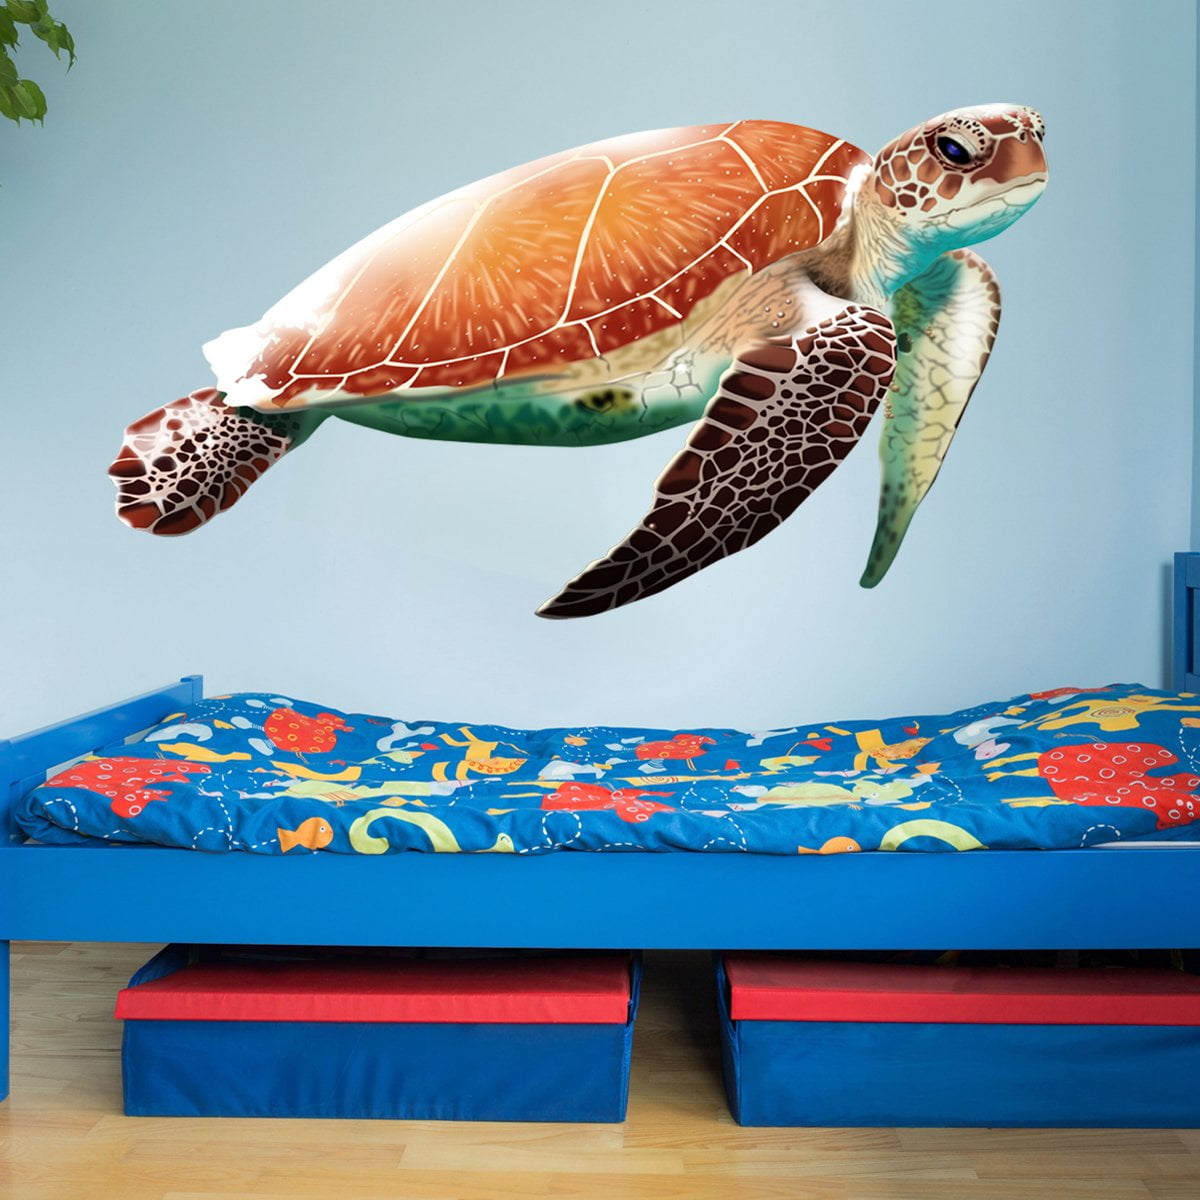 Sea Turtle vinyl decal/sticker cute reptile marine turtle ocean tropical 